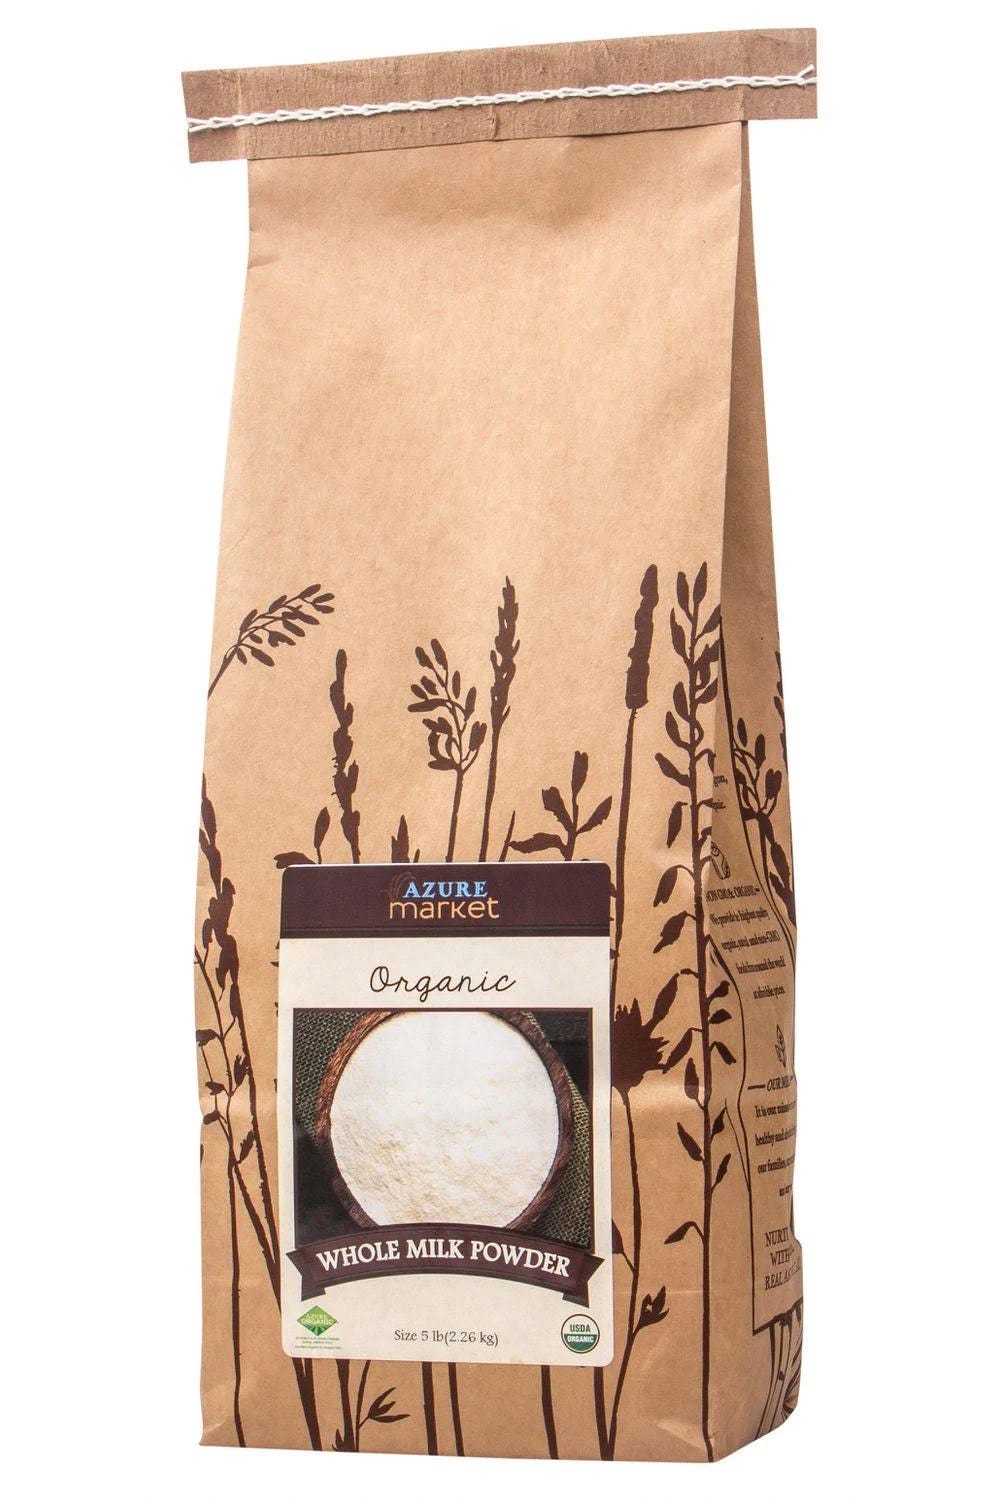 Azure Market Organic Whole Milk Powder (5 lbs) | Image